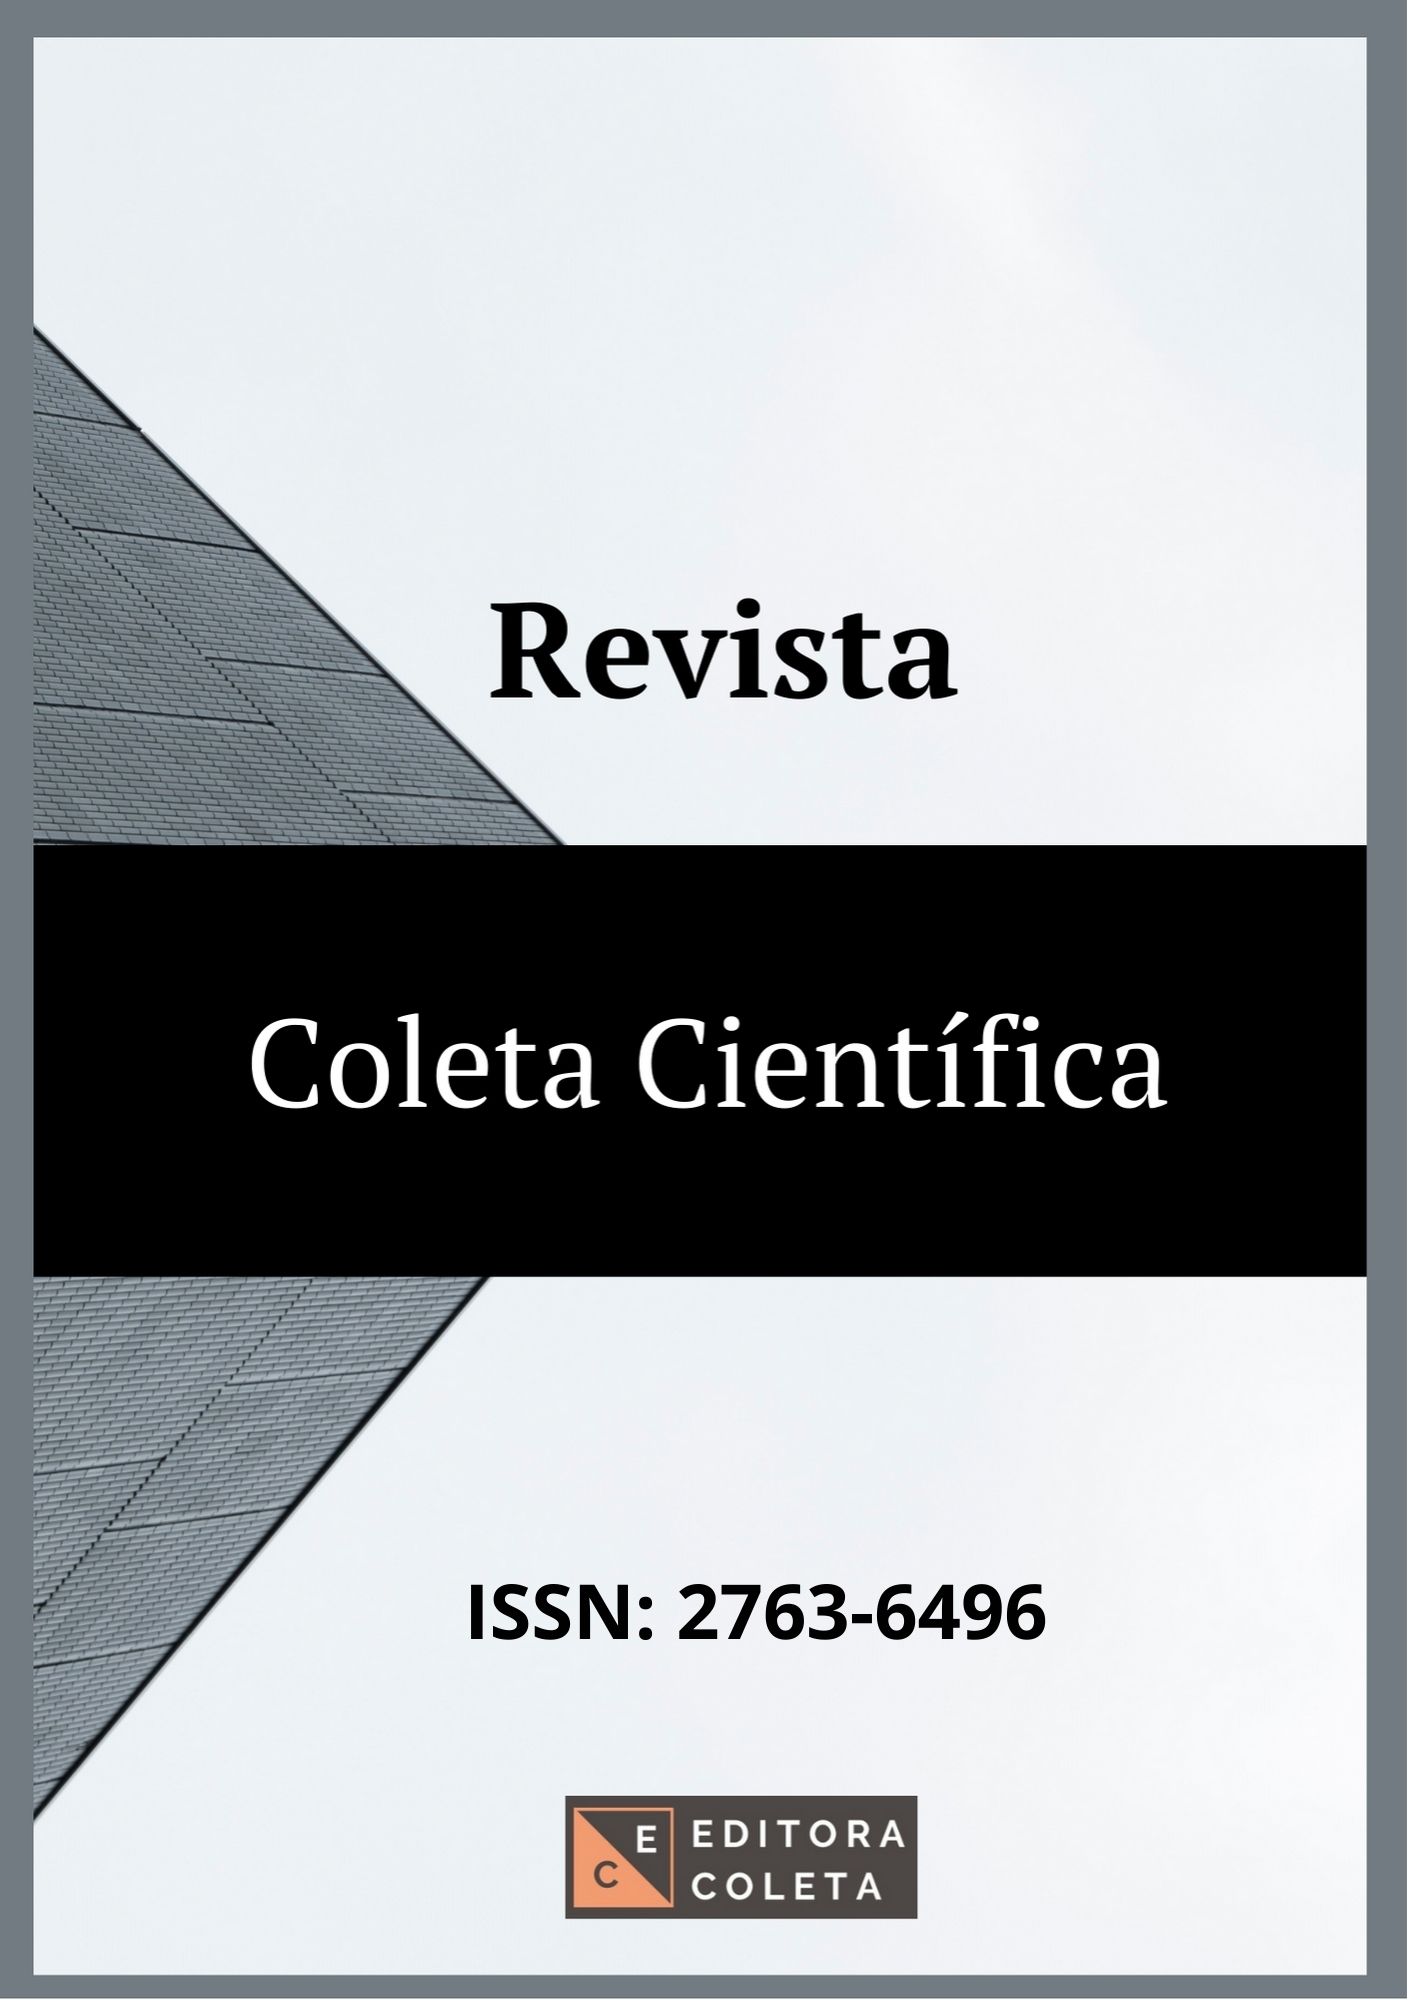 					Visualizar v. 1 n. 1 (2017): Revista Coleta Científica
				